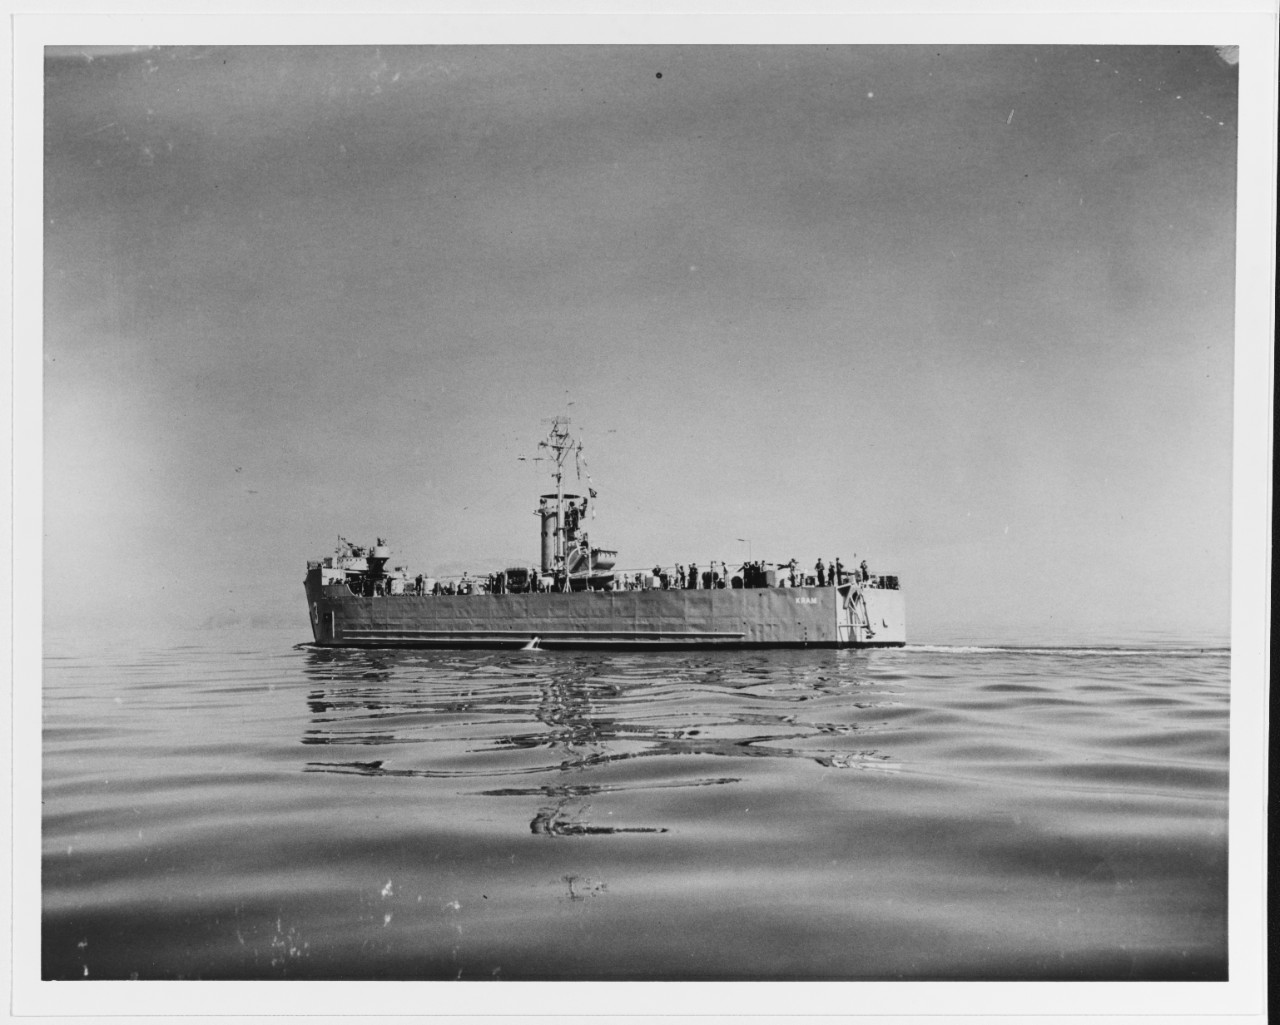 KRAM (Thai medium landing ship, 1945)